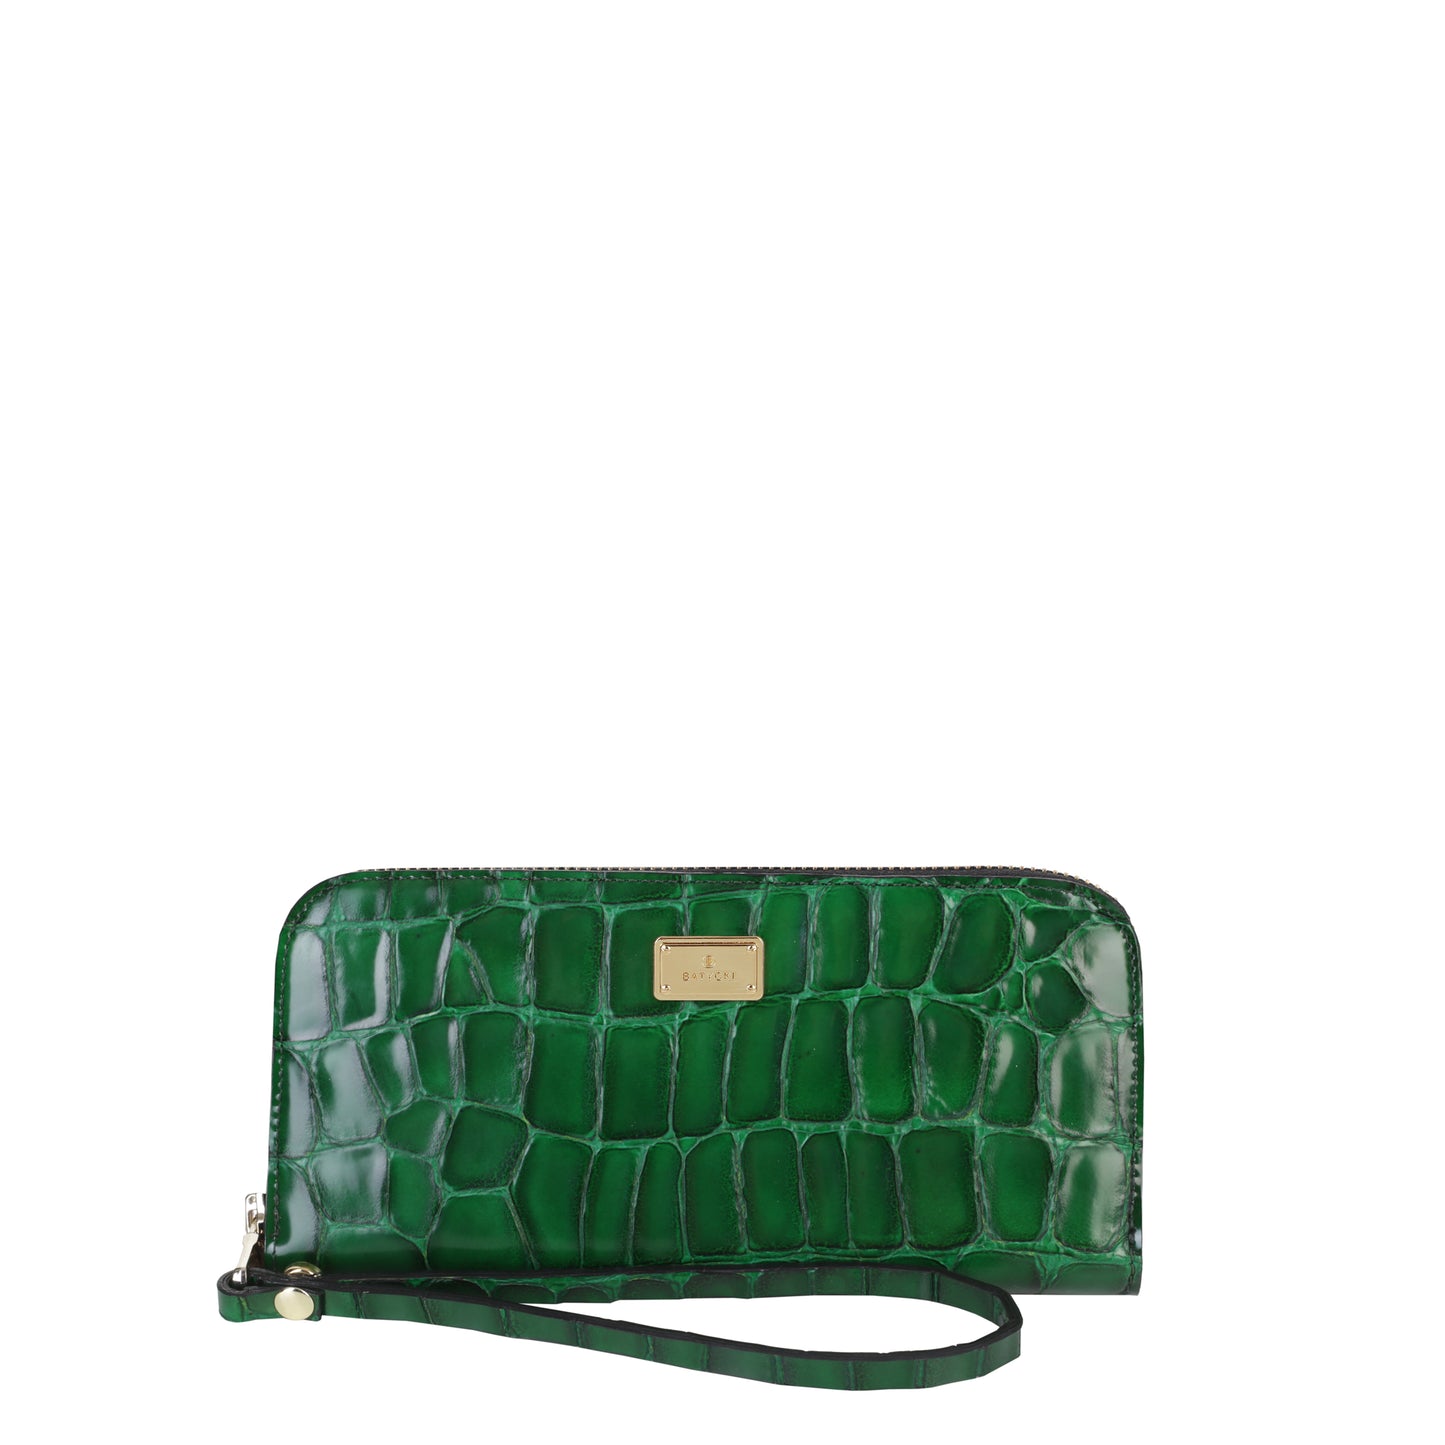 CUCA MATE green women's leather wallet